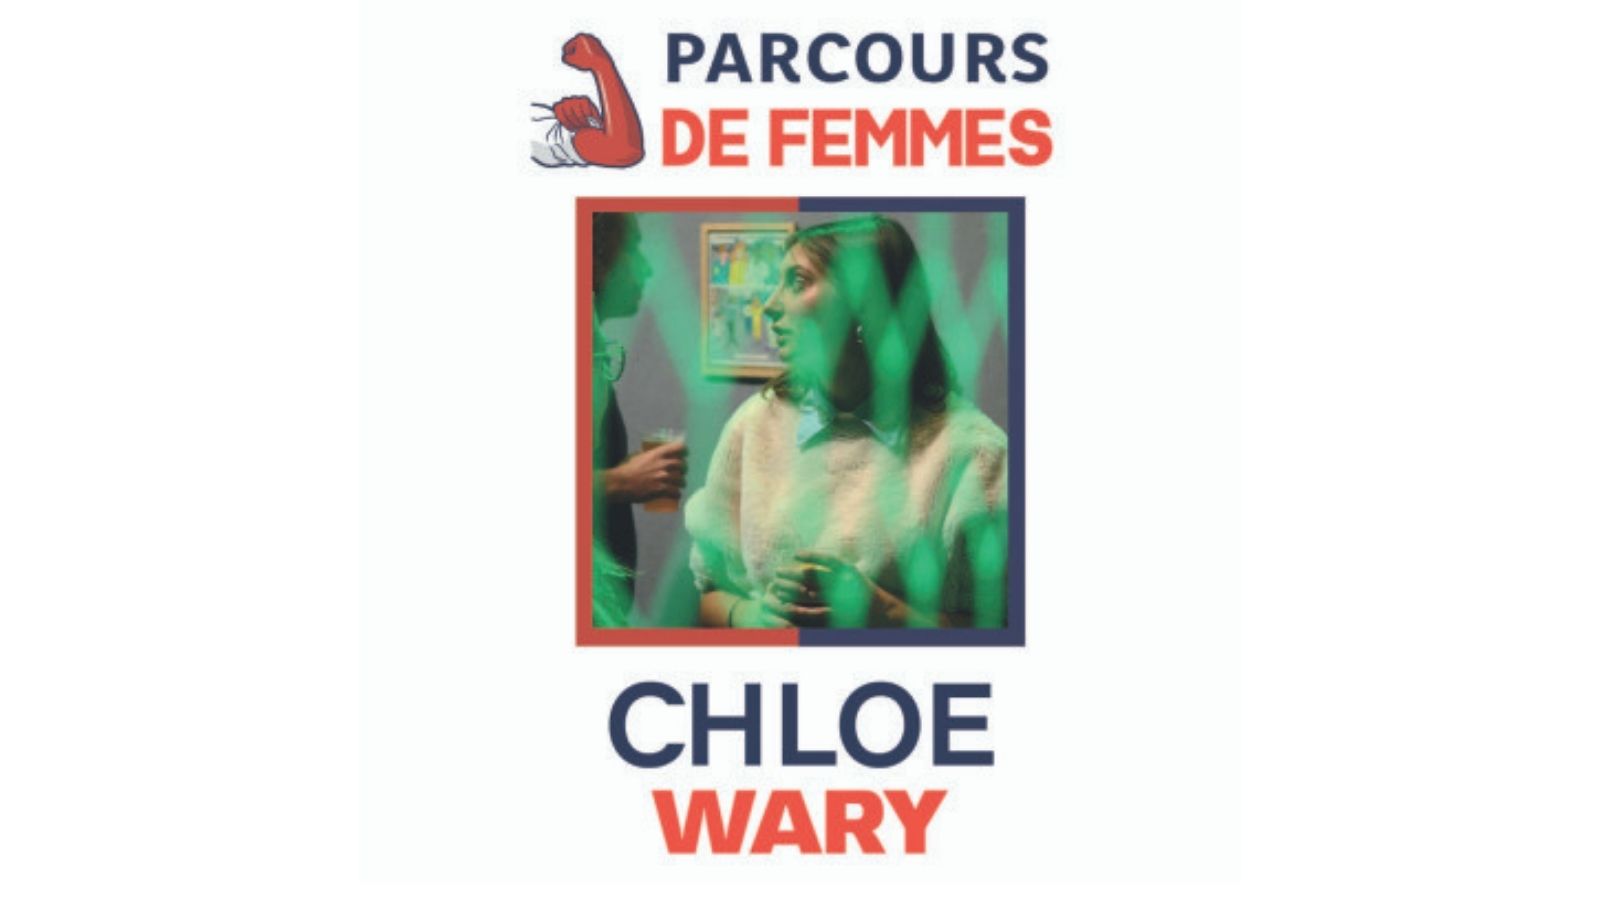 Chloé Wary